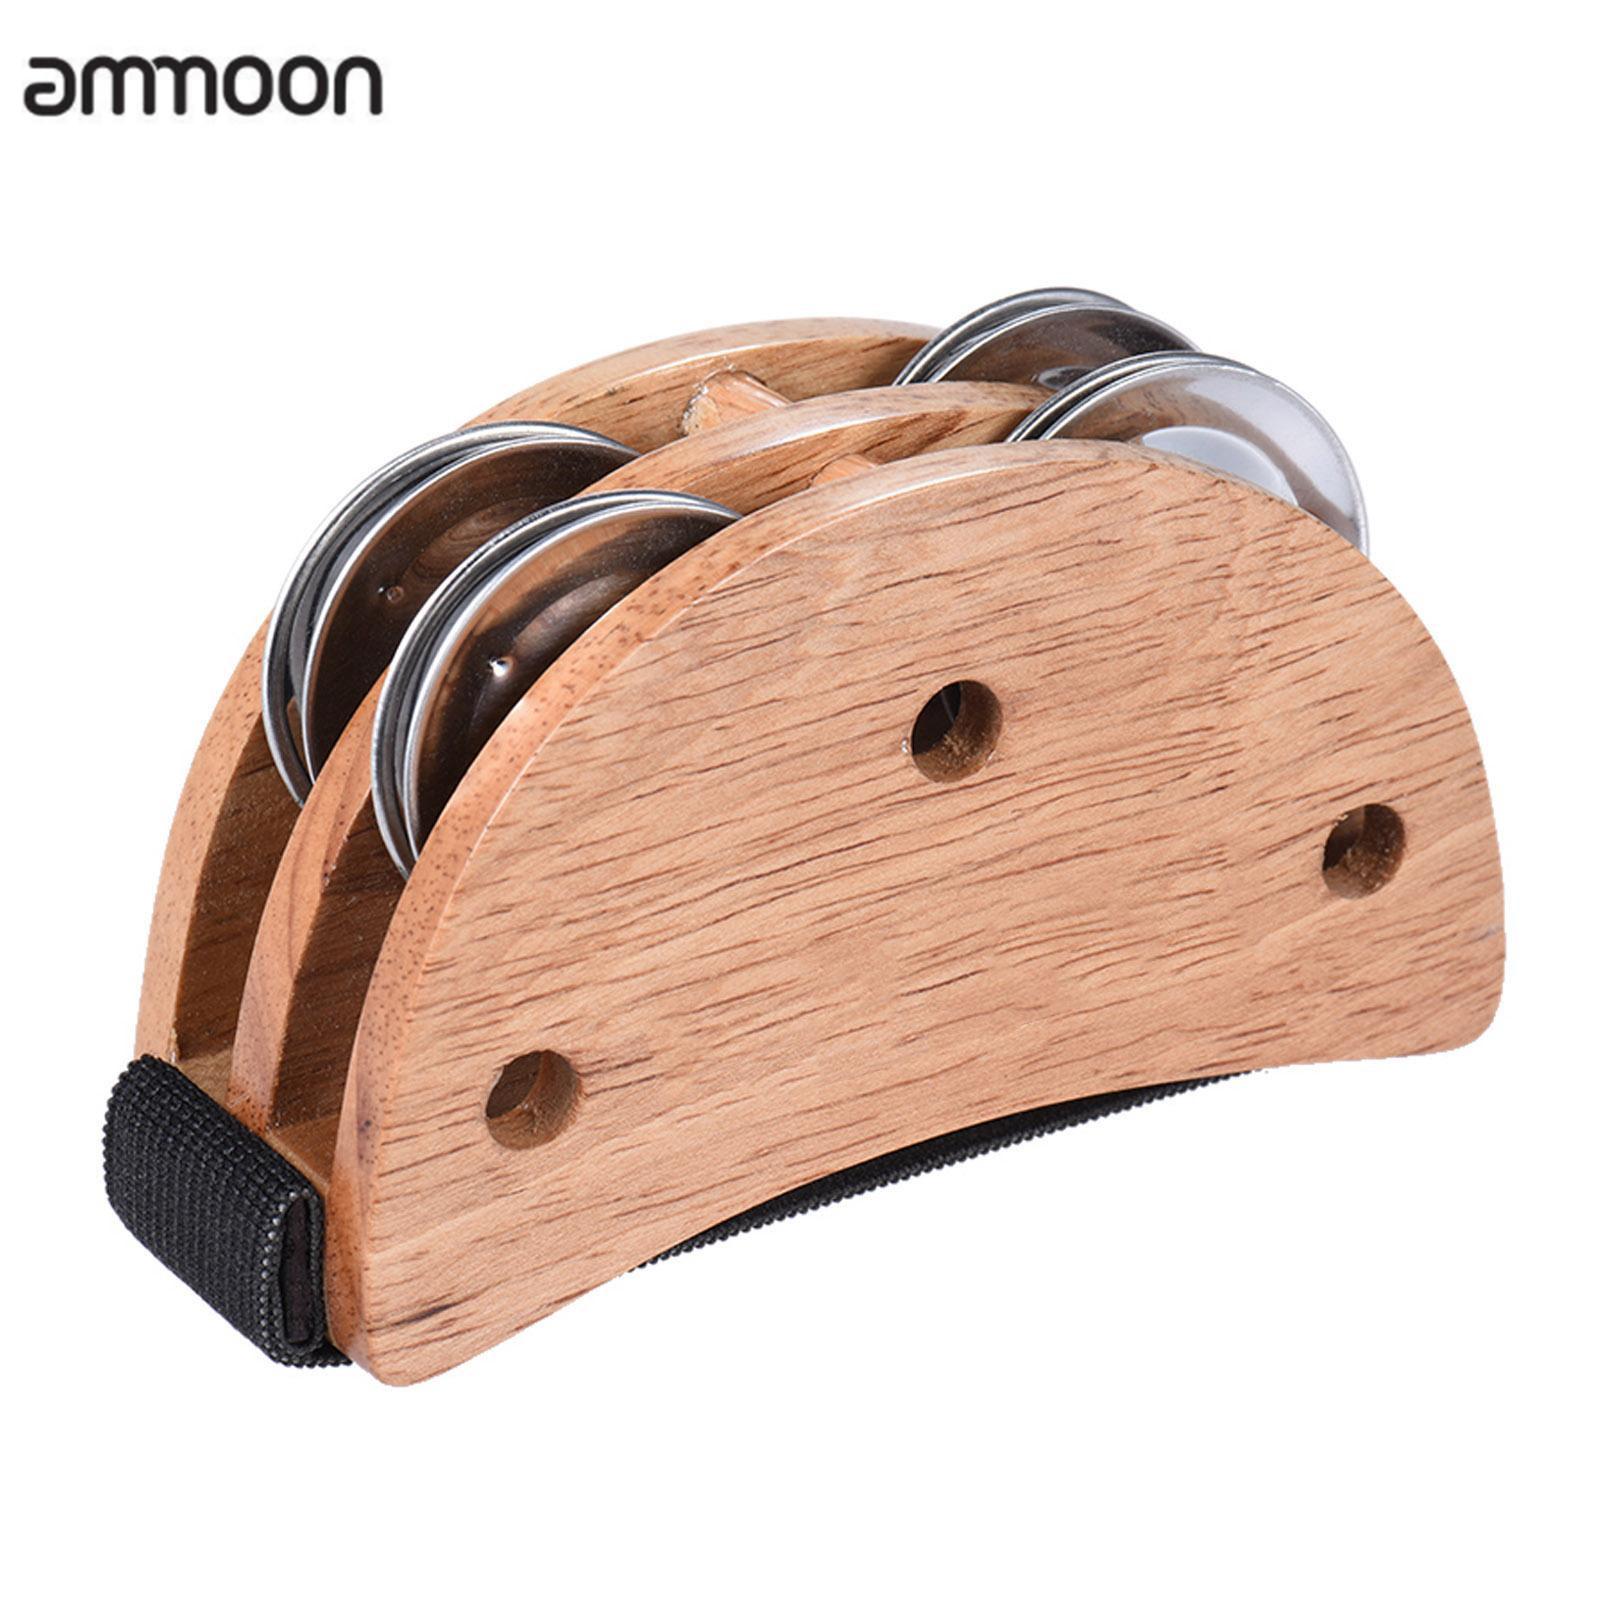 Ammoon Elliptical Cajon Box Drum Companion Accessory Foot Jingle Tambourine for Hand Percussion Instruments